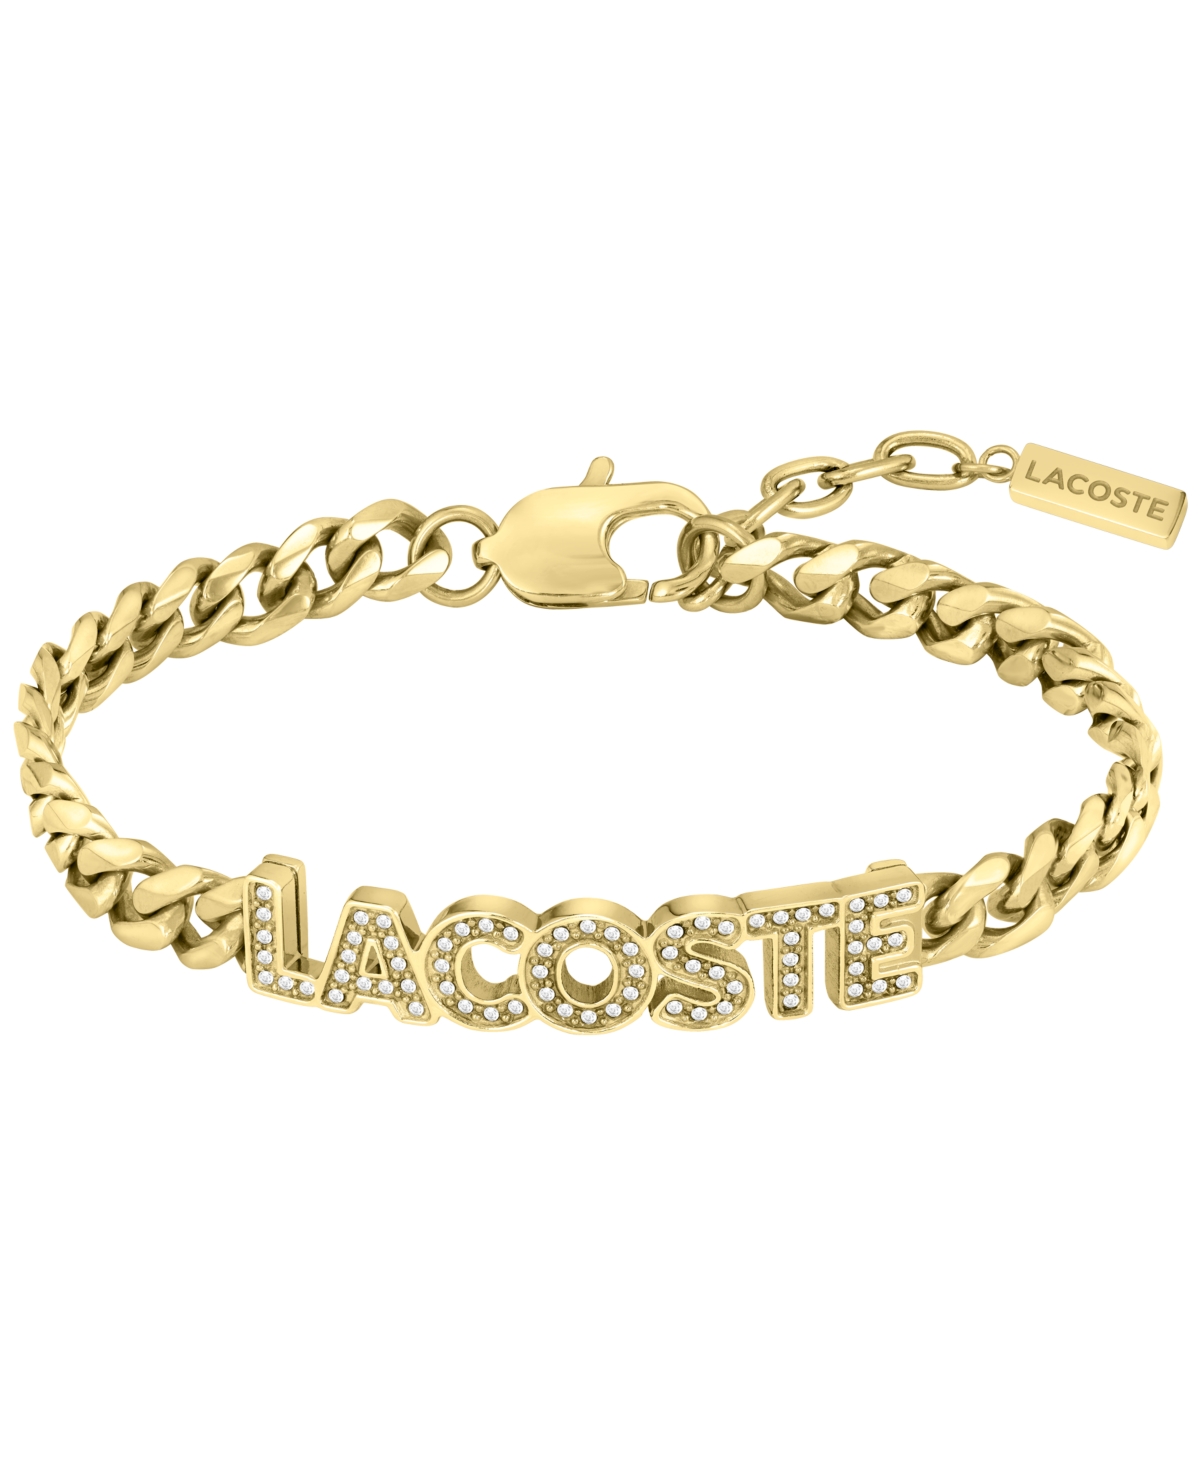 Lacoste Crystal Gold Tone Bracelet